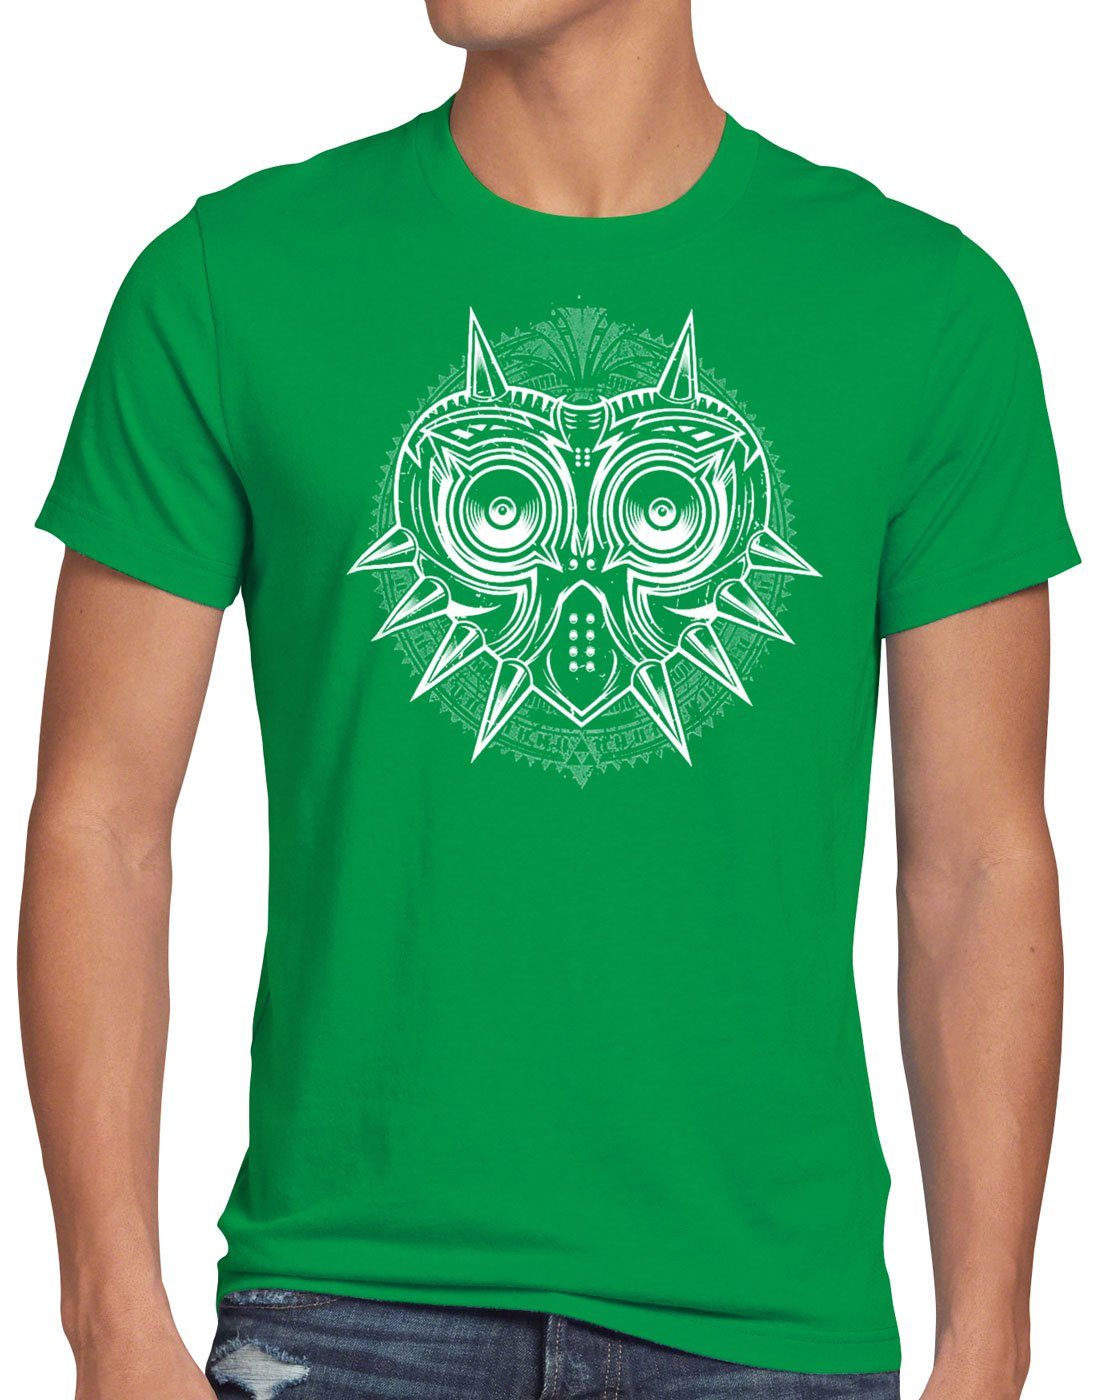 Print-Shirt switch grün n64 Herren T-Shirt style3 link lite ocarina Mask Majora’s